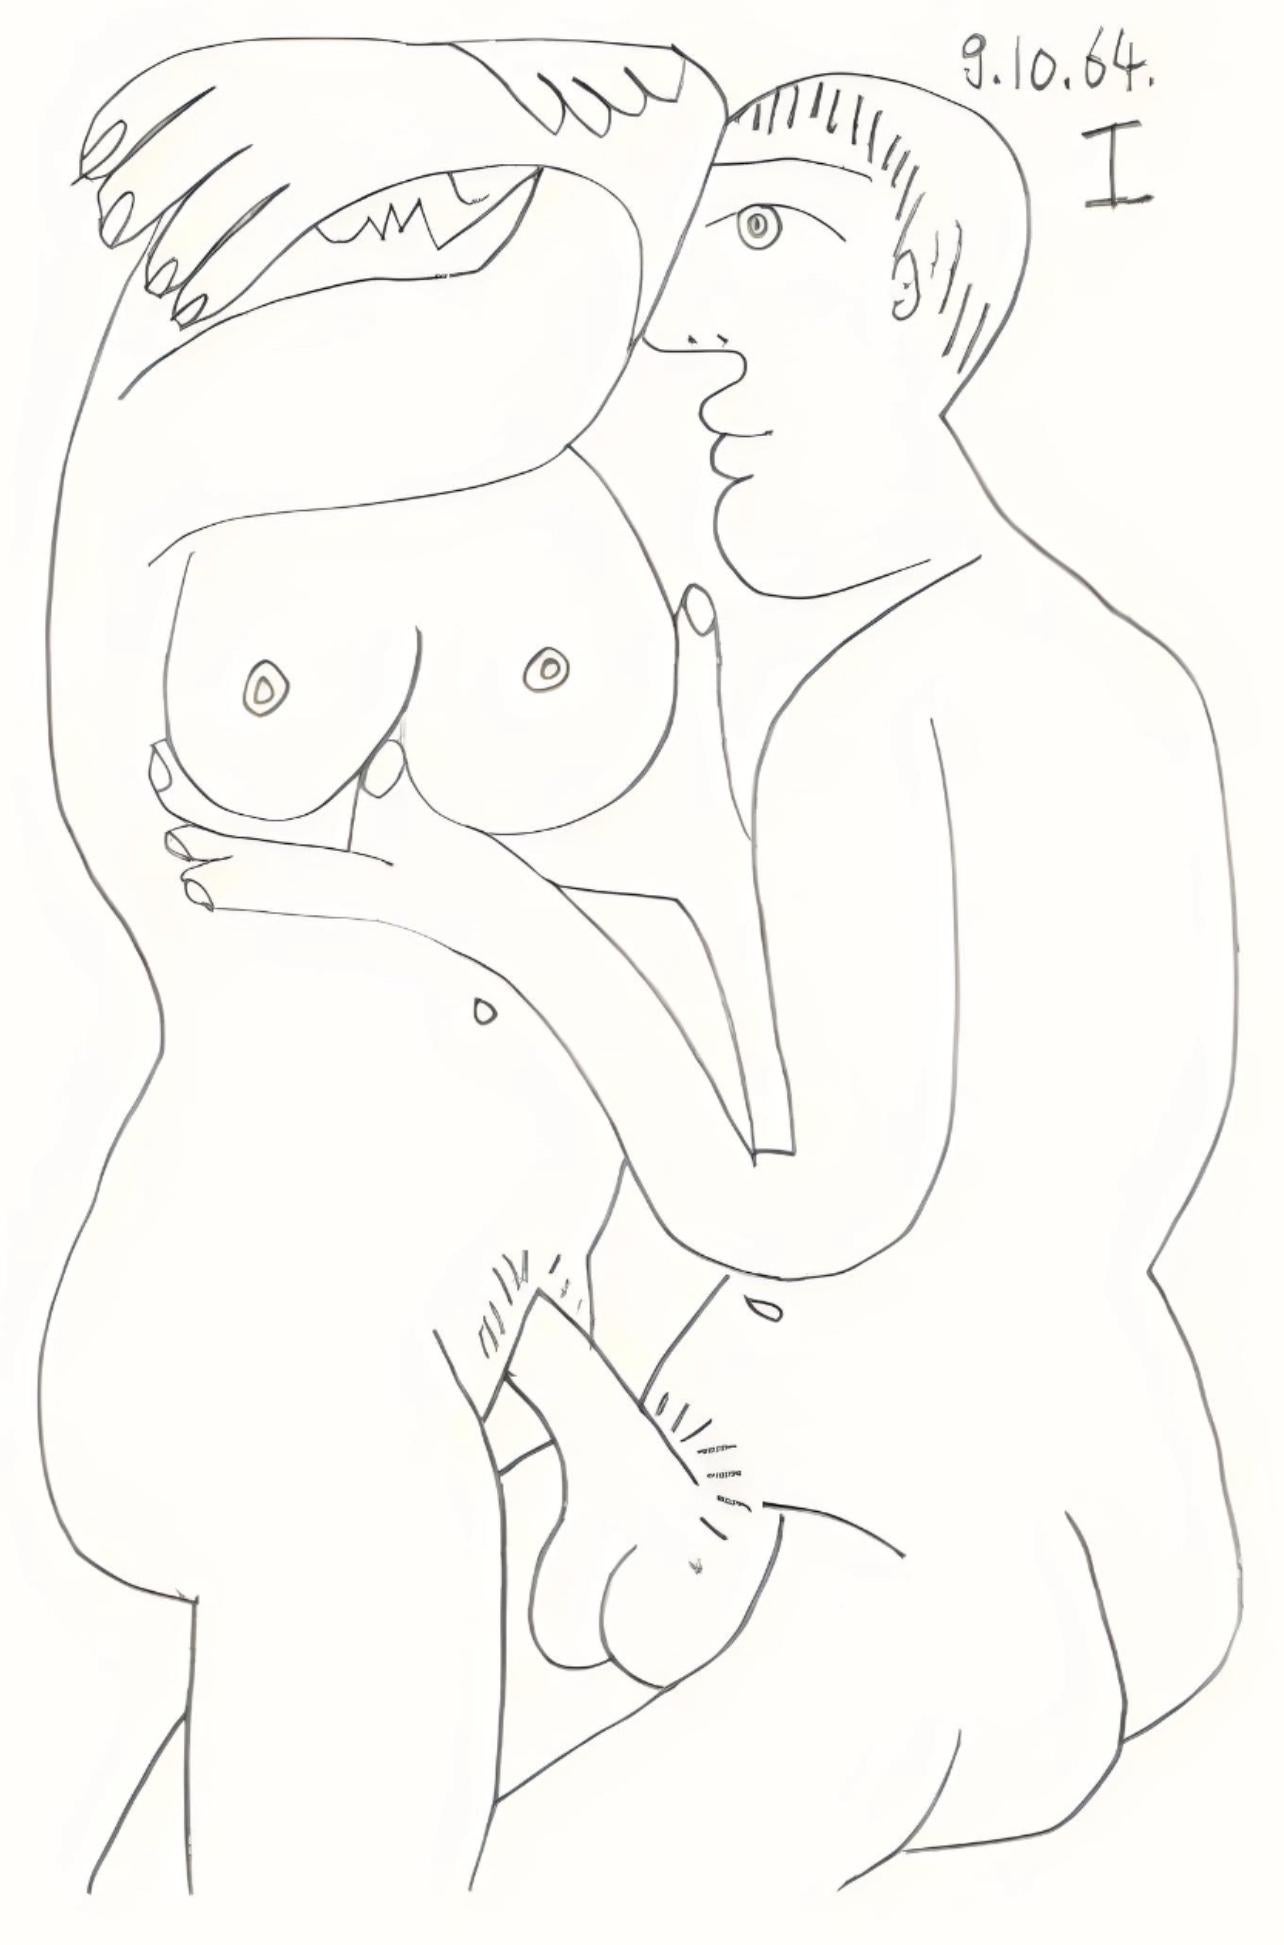 Picasso, Le Goût du Bonheur 68 (Cramer 148; Bloch 2013) (after)